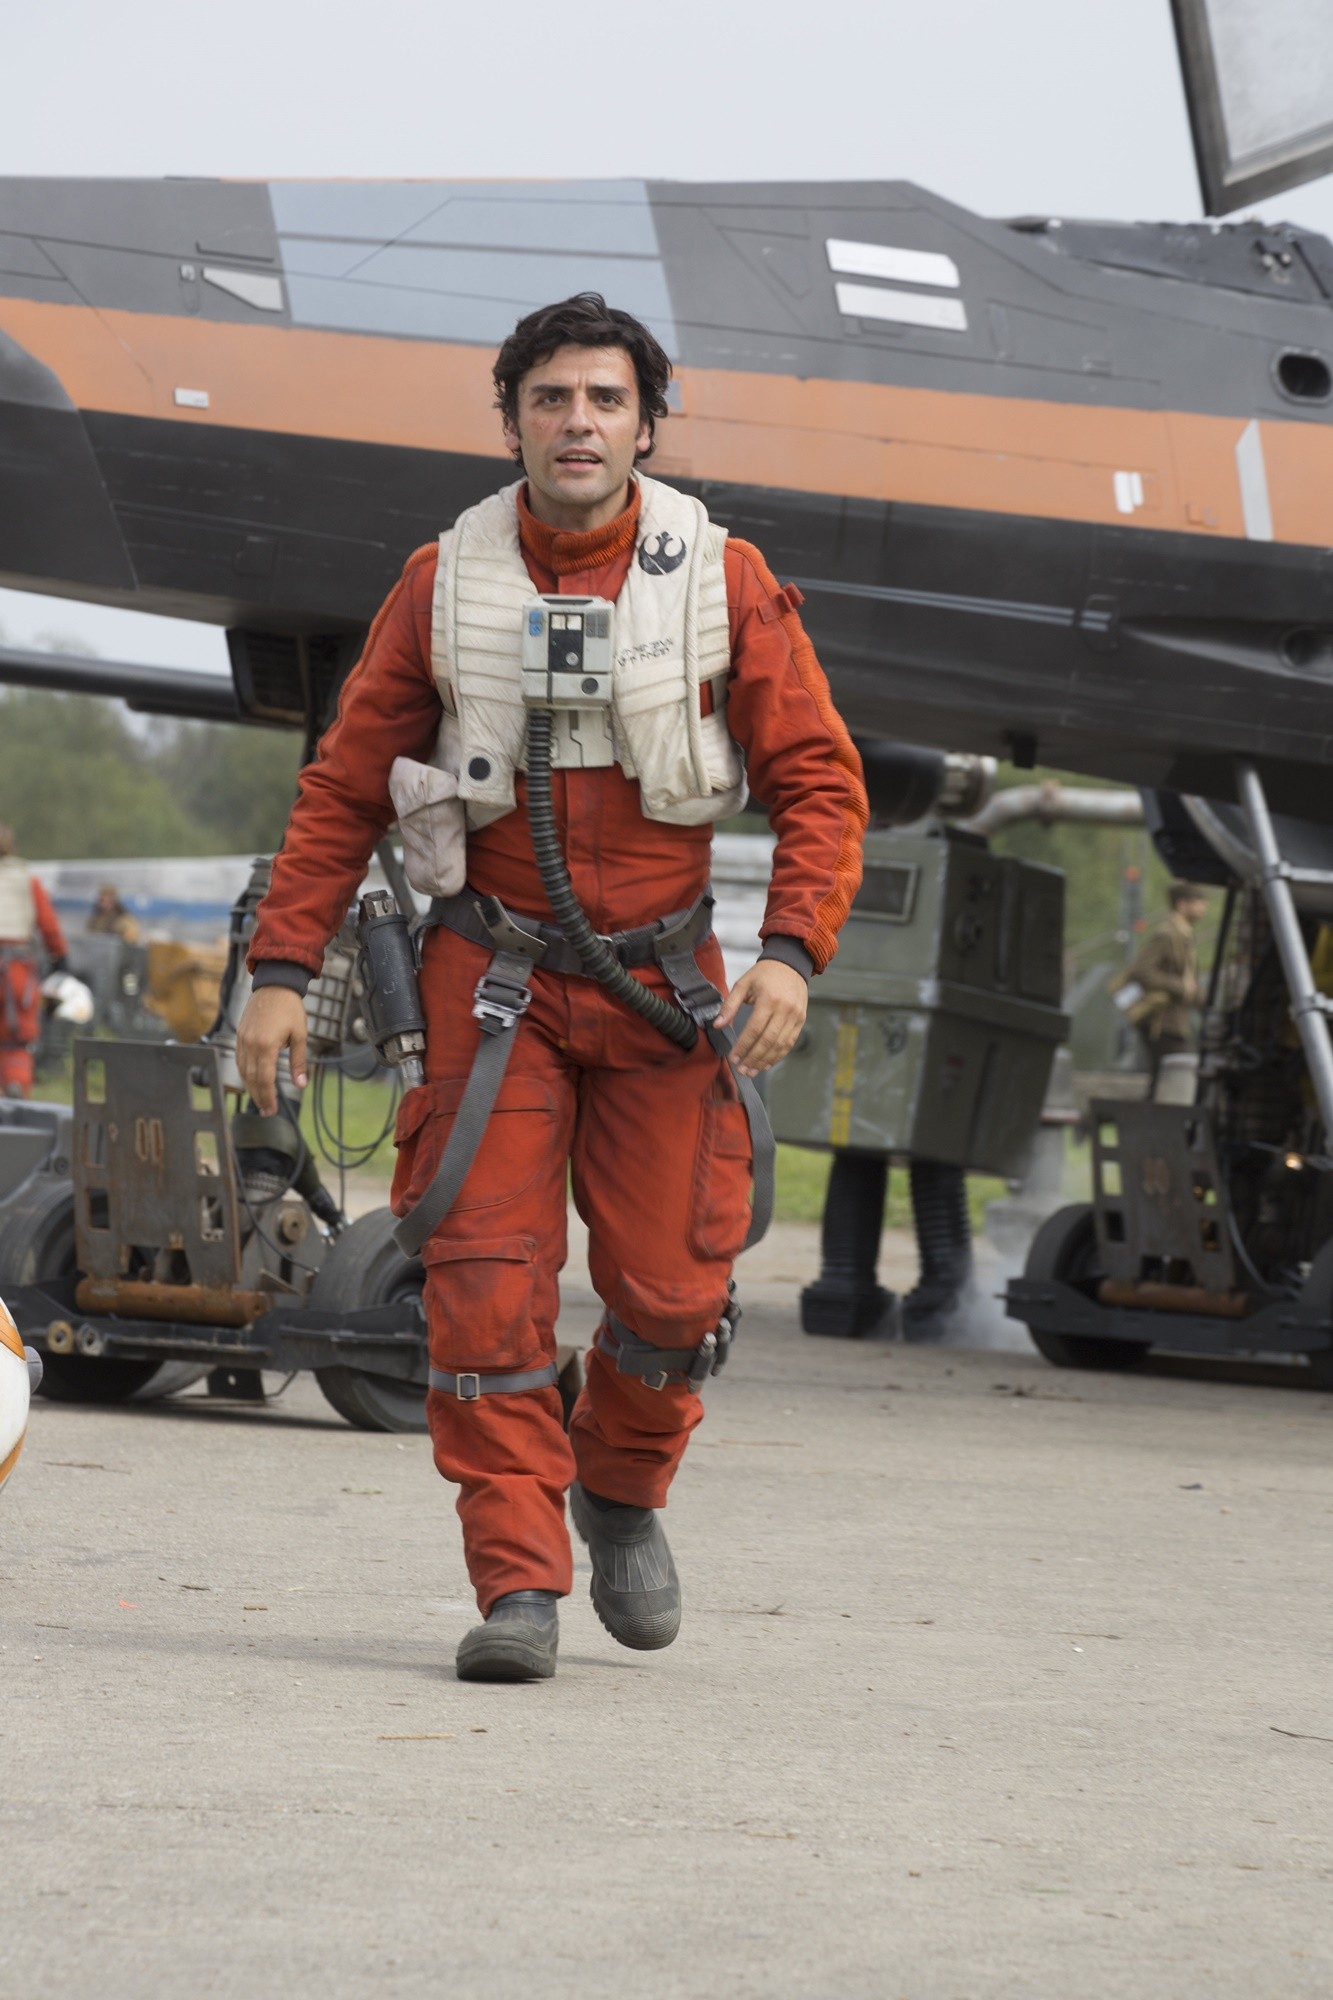 Oscar Isaac stars as Poe Dameron in Walt Disney Pictures' Star Wars: The Force Awakens (2015)